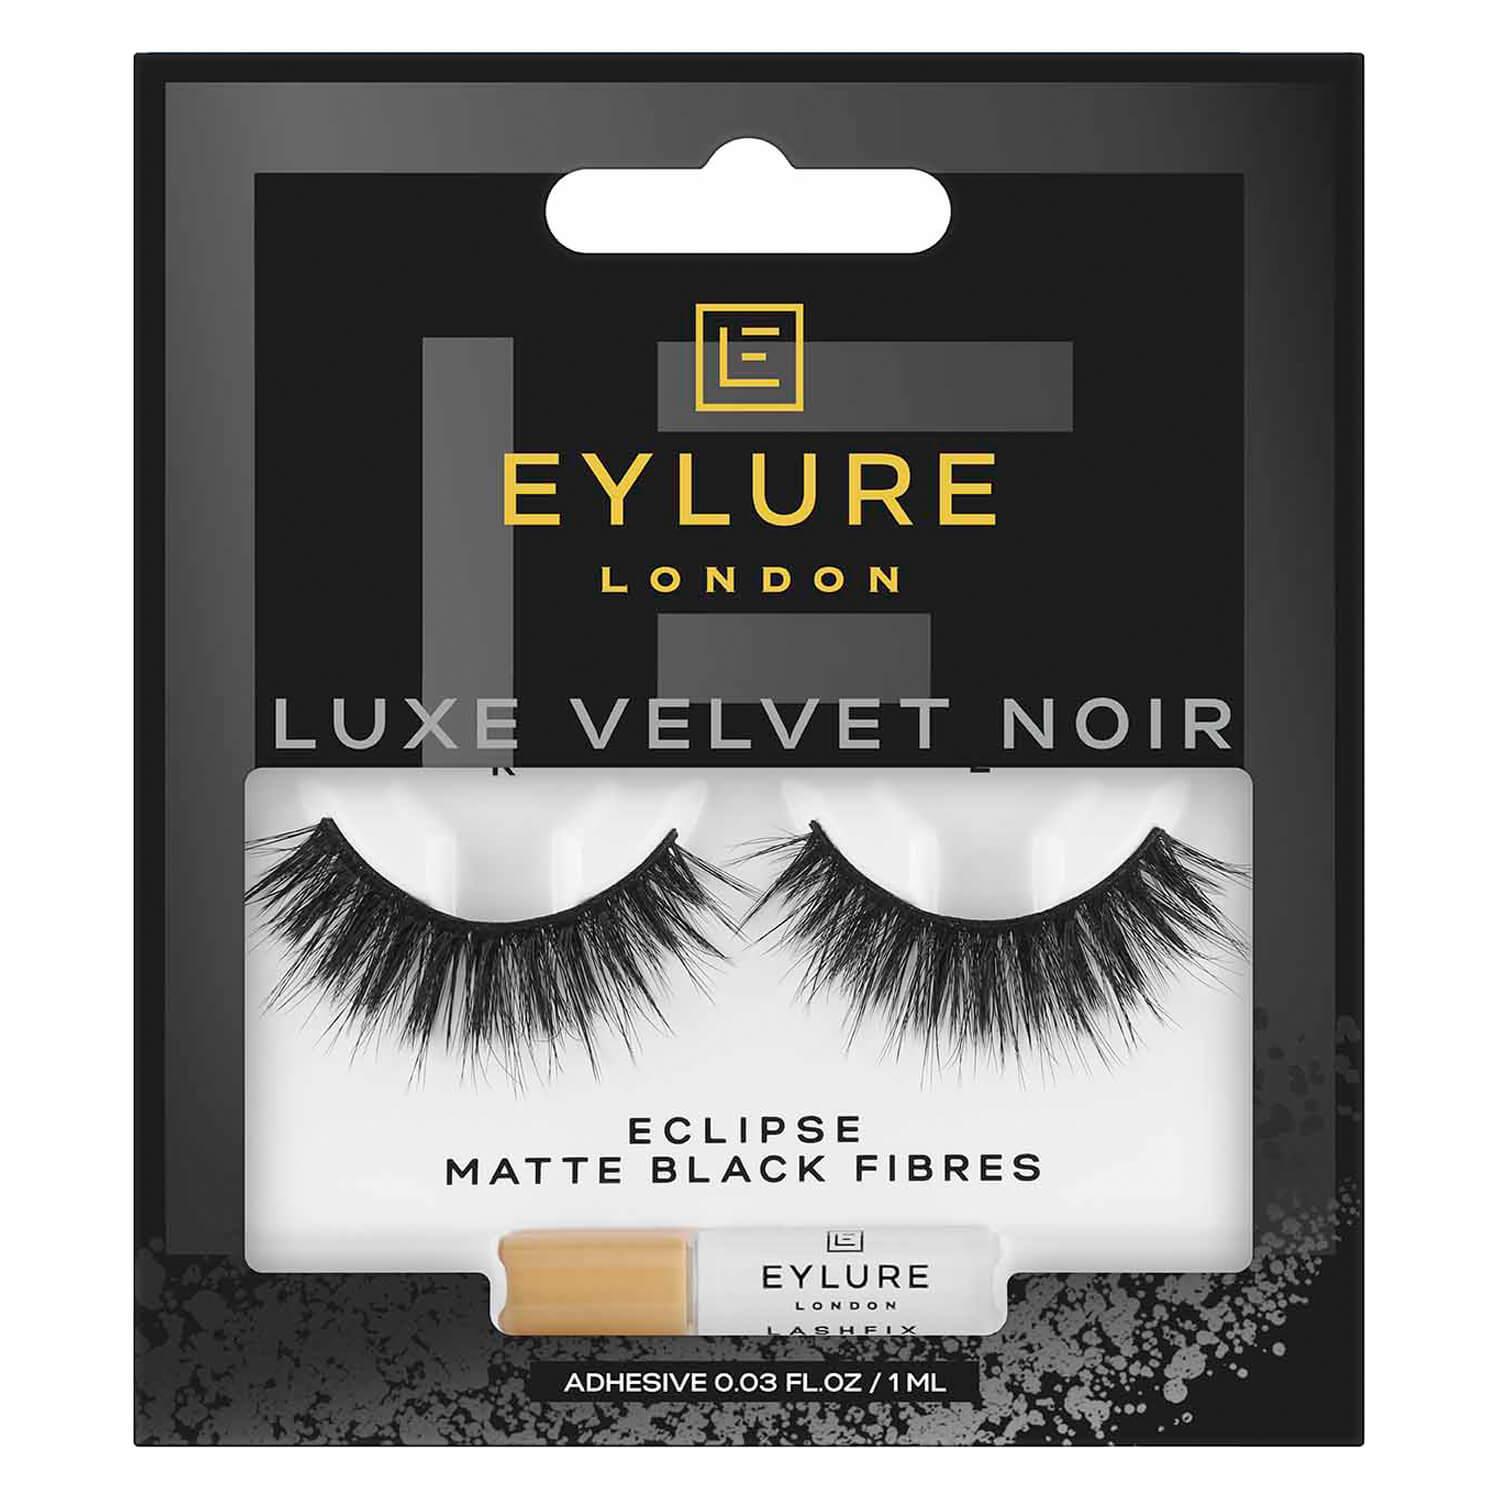 EYLURE - Luxe Velvet Noir Eclipse